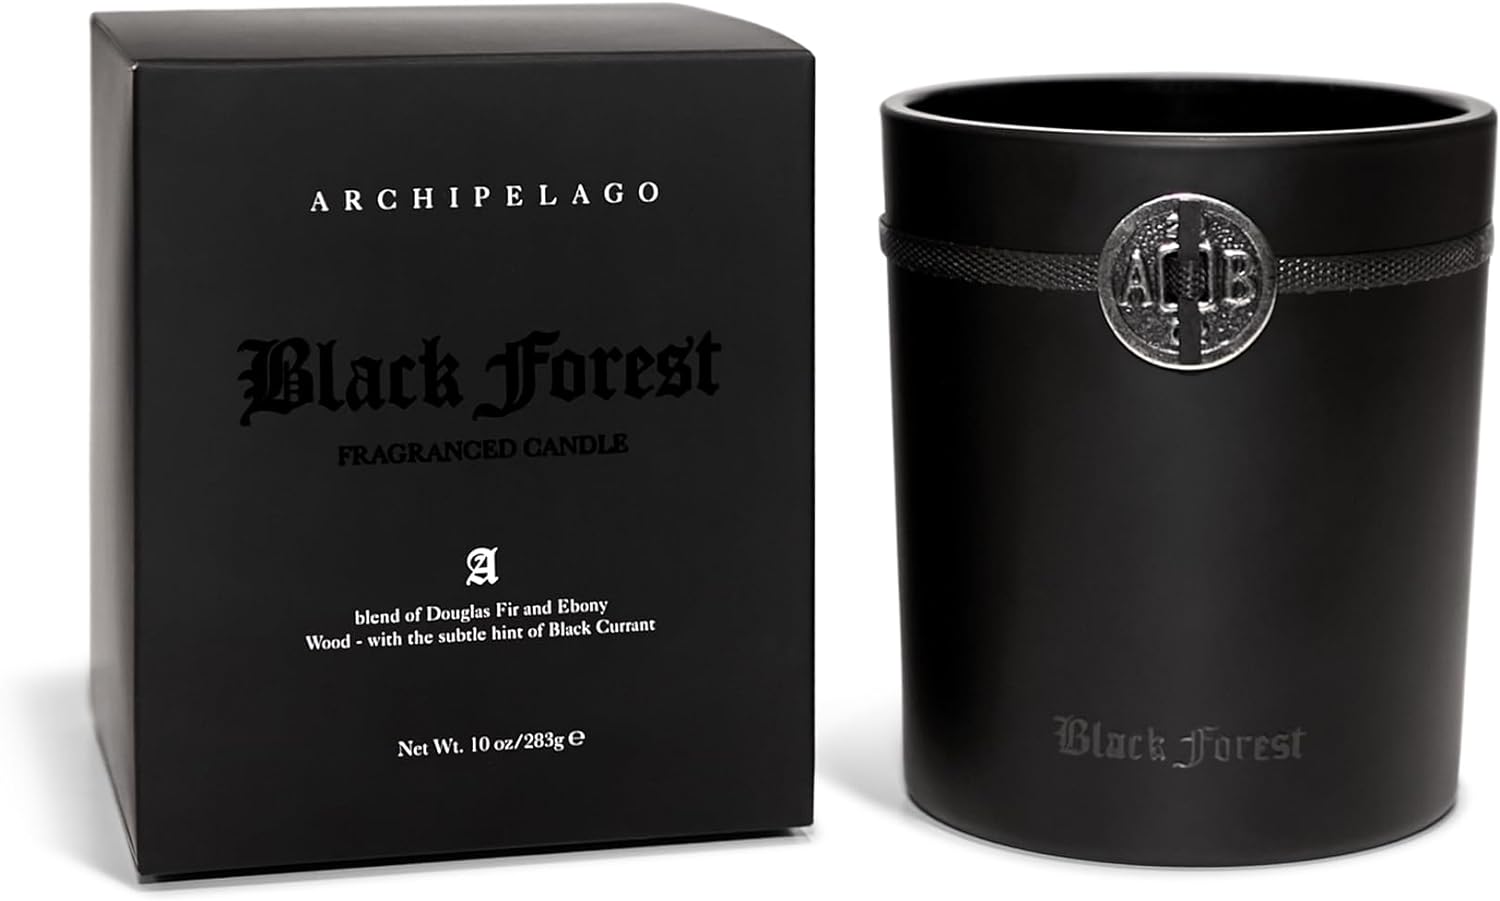 Archipelago Botanicals Black Forest Boxed Candle, Dark Ebony Wood, Douglas Fir and Black Currant, Clean Soy Wax Blend Burns 60 Hours (10 oz)